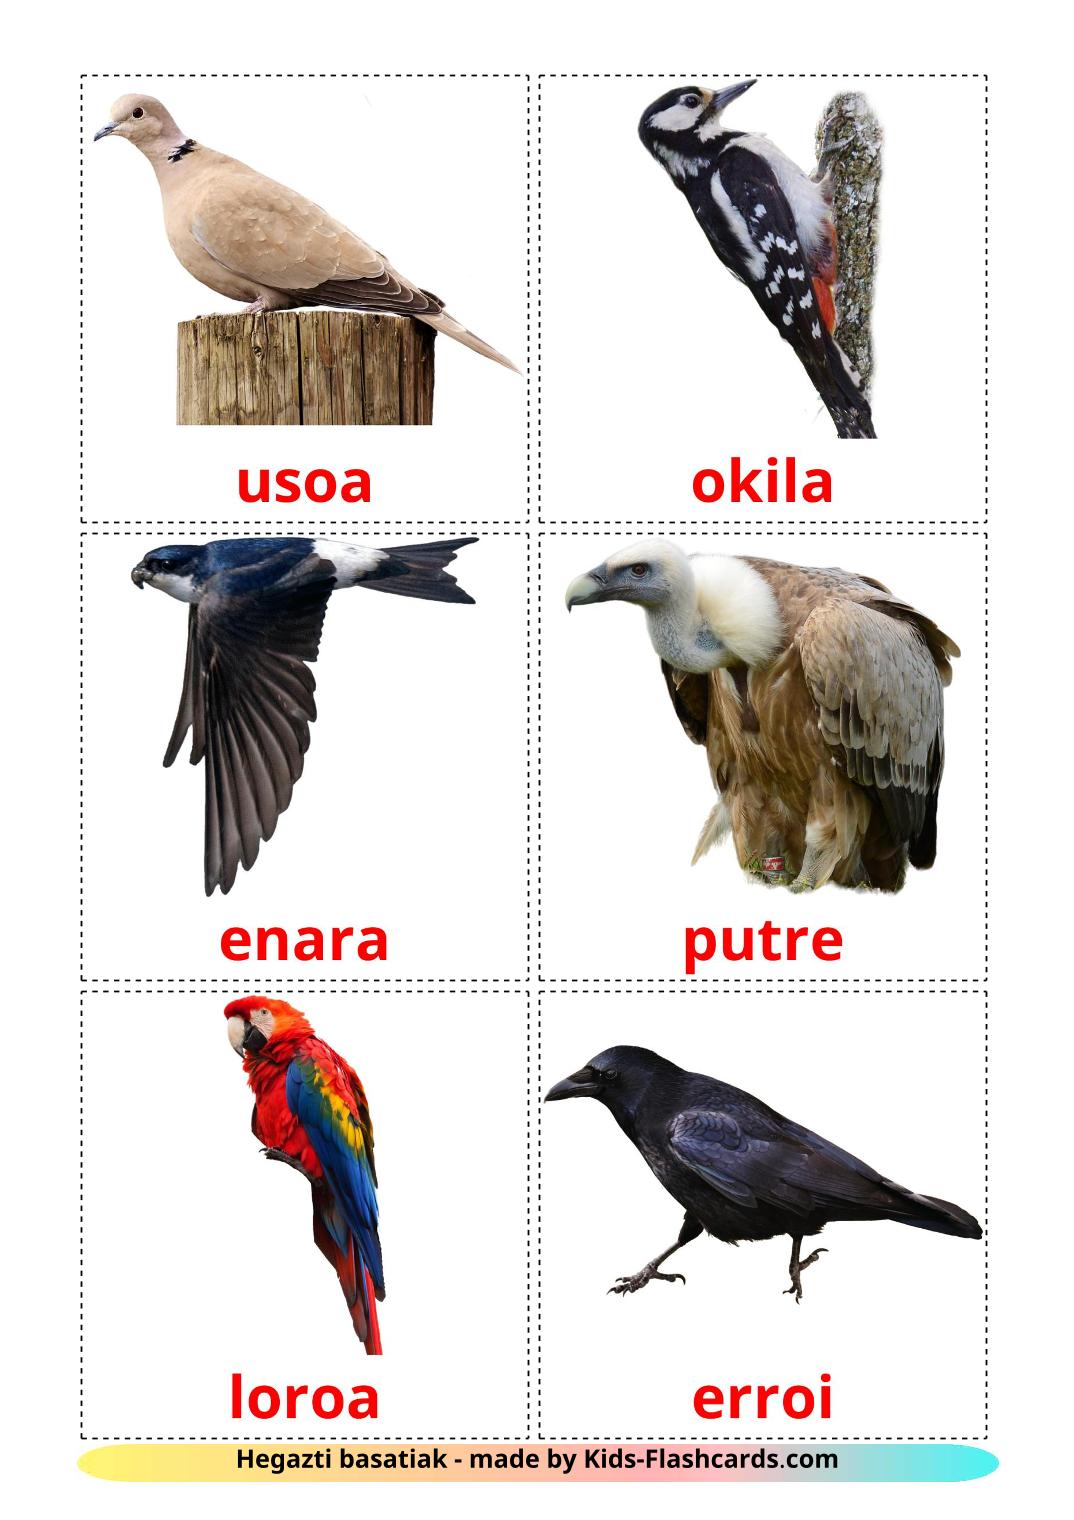 Pájaros salvajes - 18 fichas de euskera para imprimir gratis 